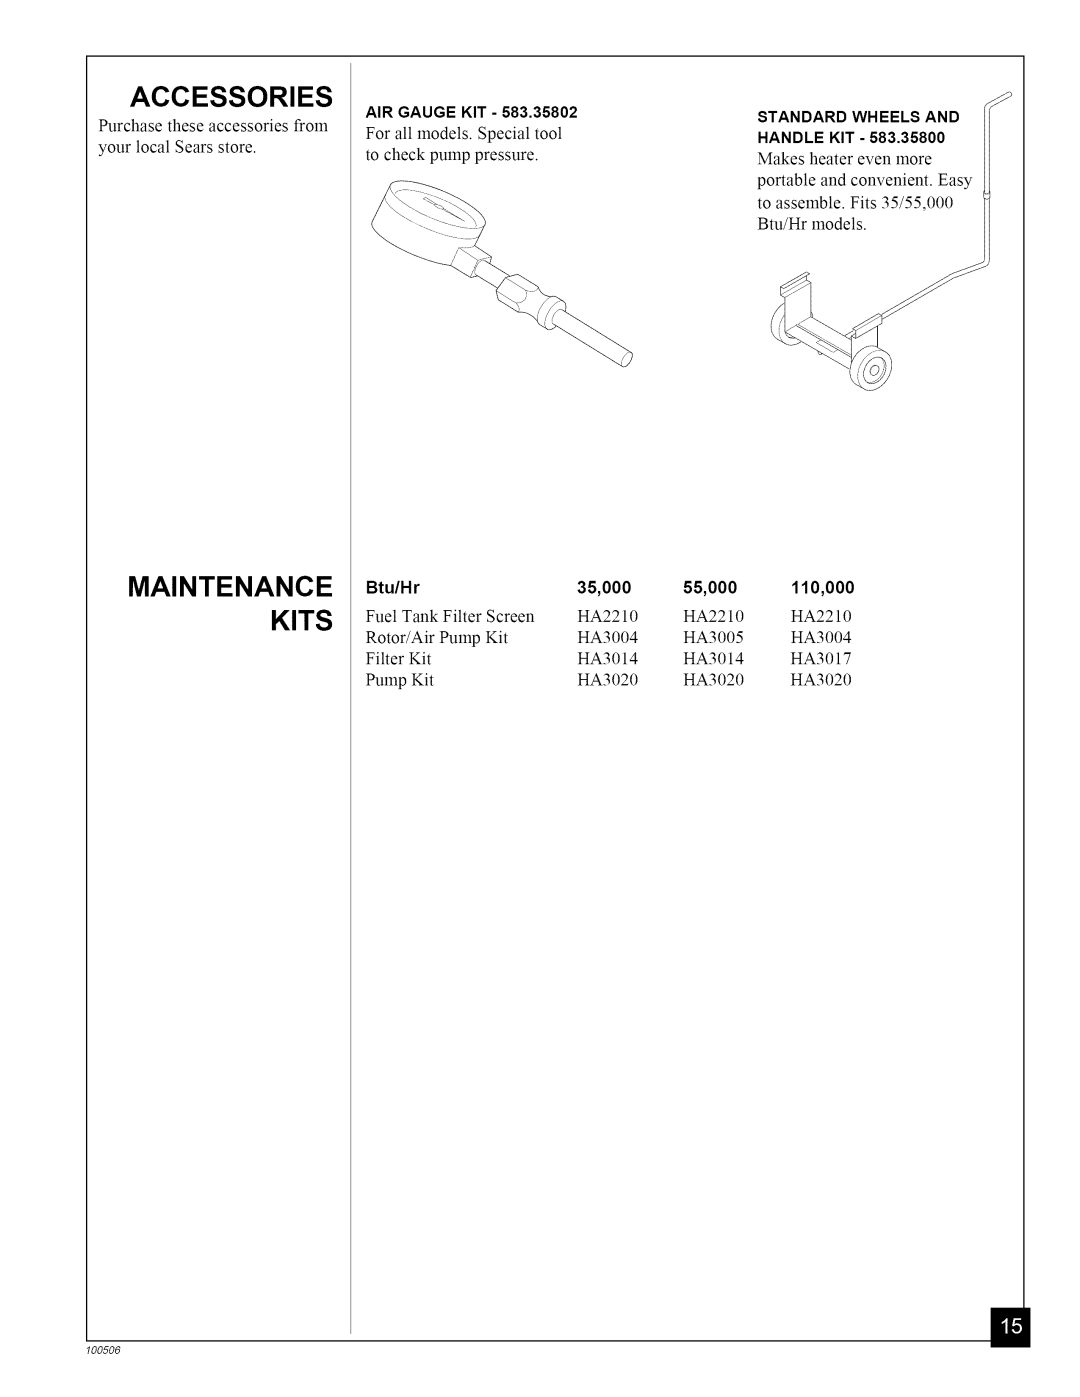 Sears 583.35683 Maintenance Kits, Air Gauge Kit, Standard Wheels And, Handle Kit, Btu/Hr, 35,000, 55,000, 110,000 